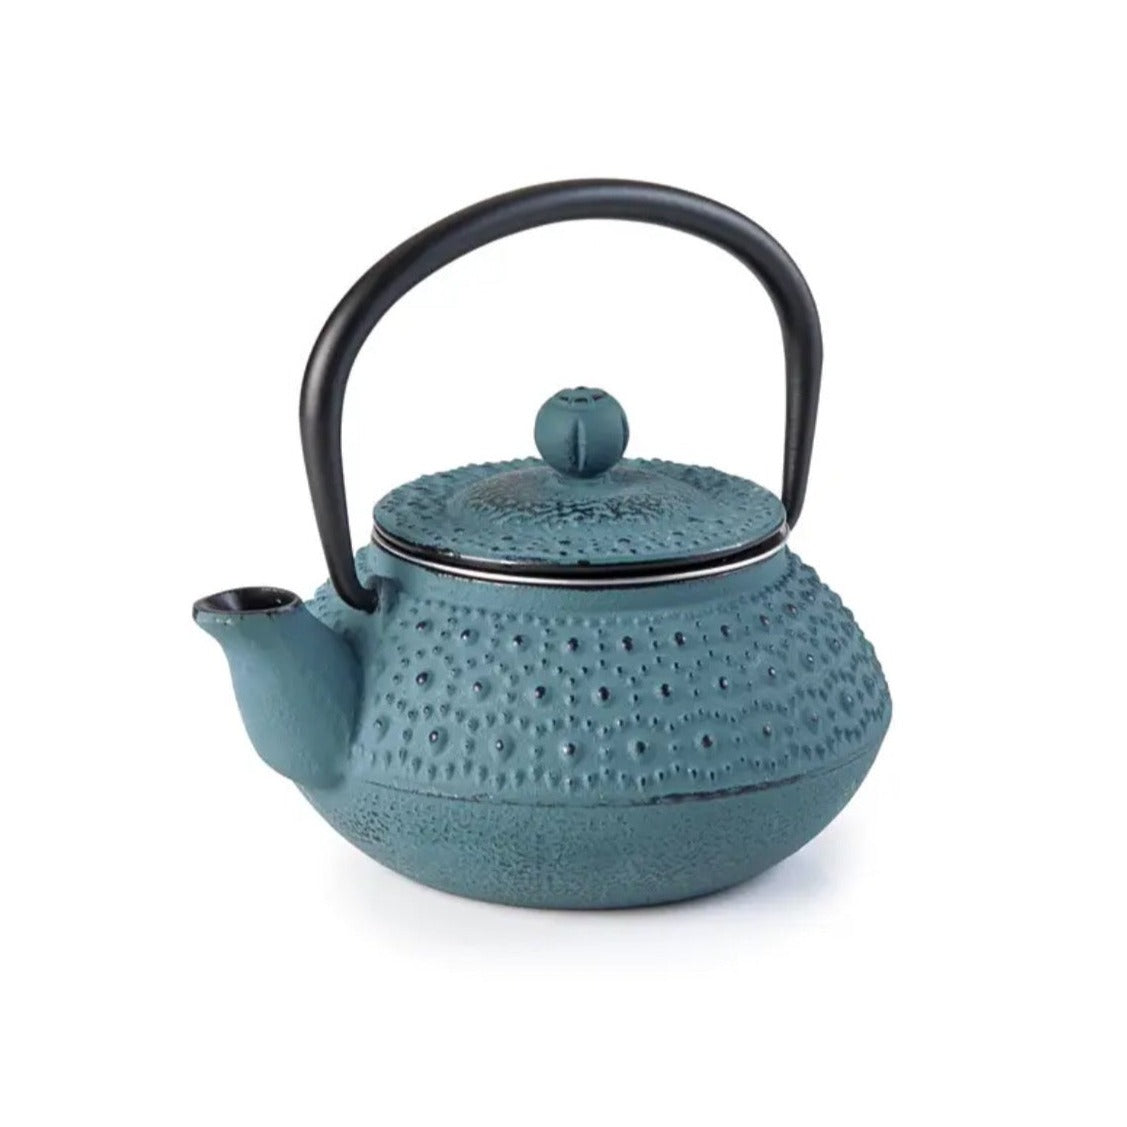 Turquoise Manaus Cast Iron Teapot